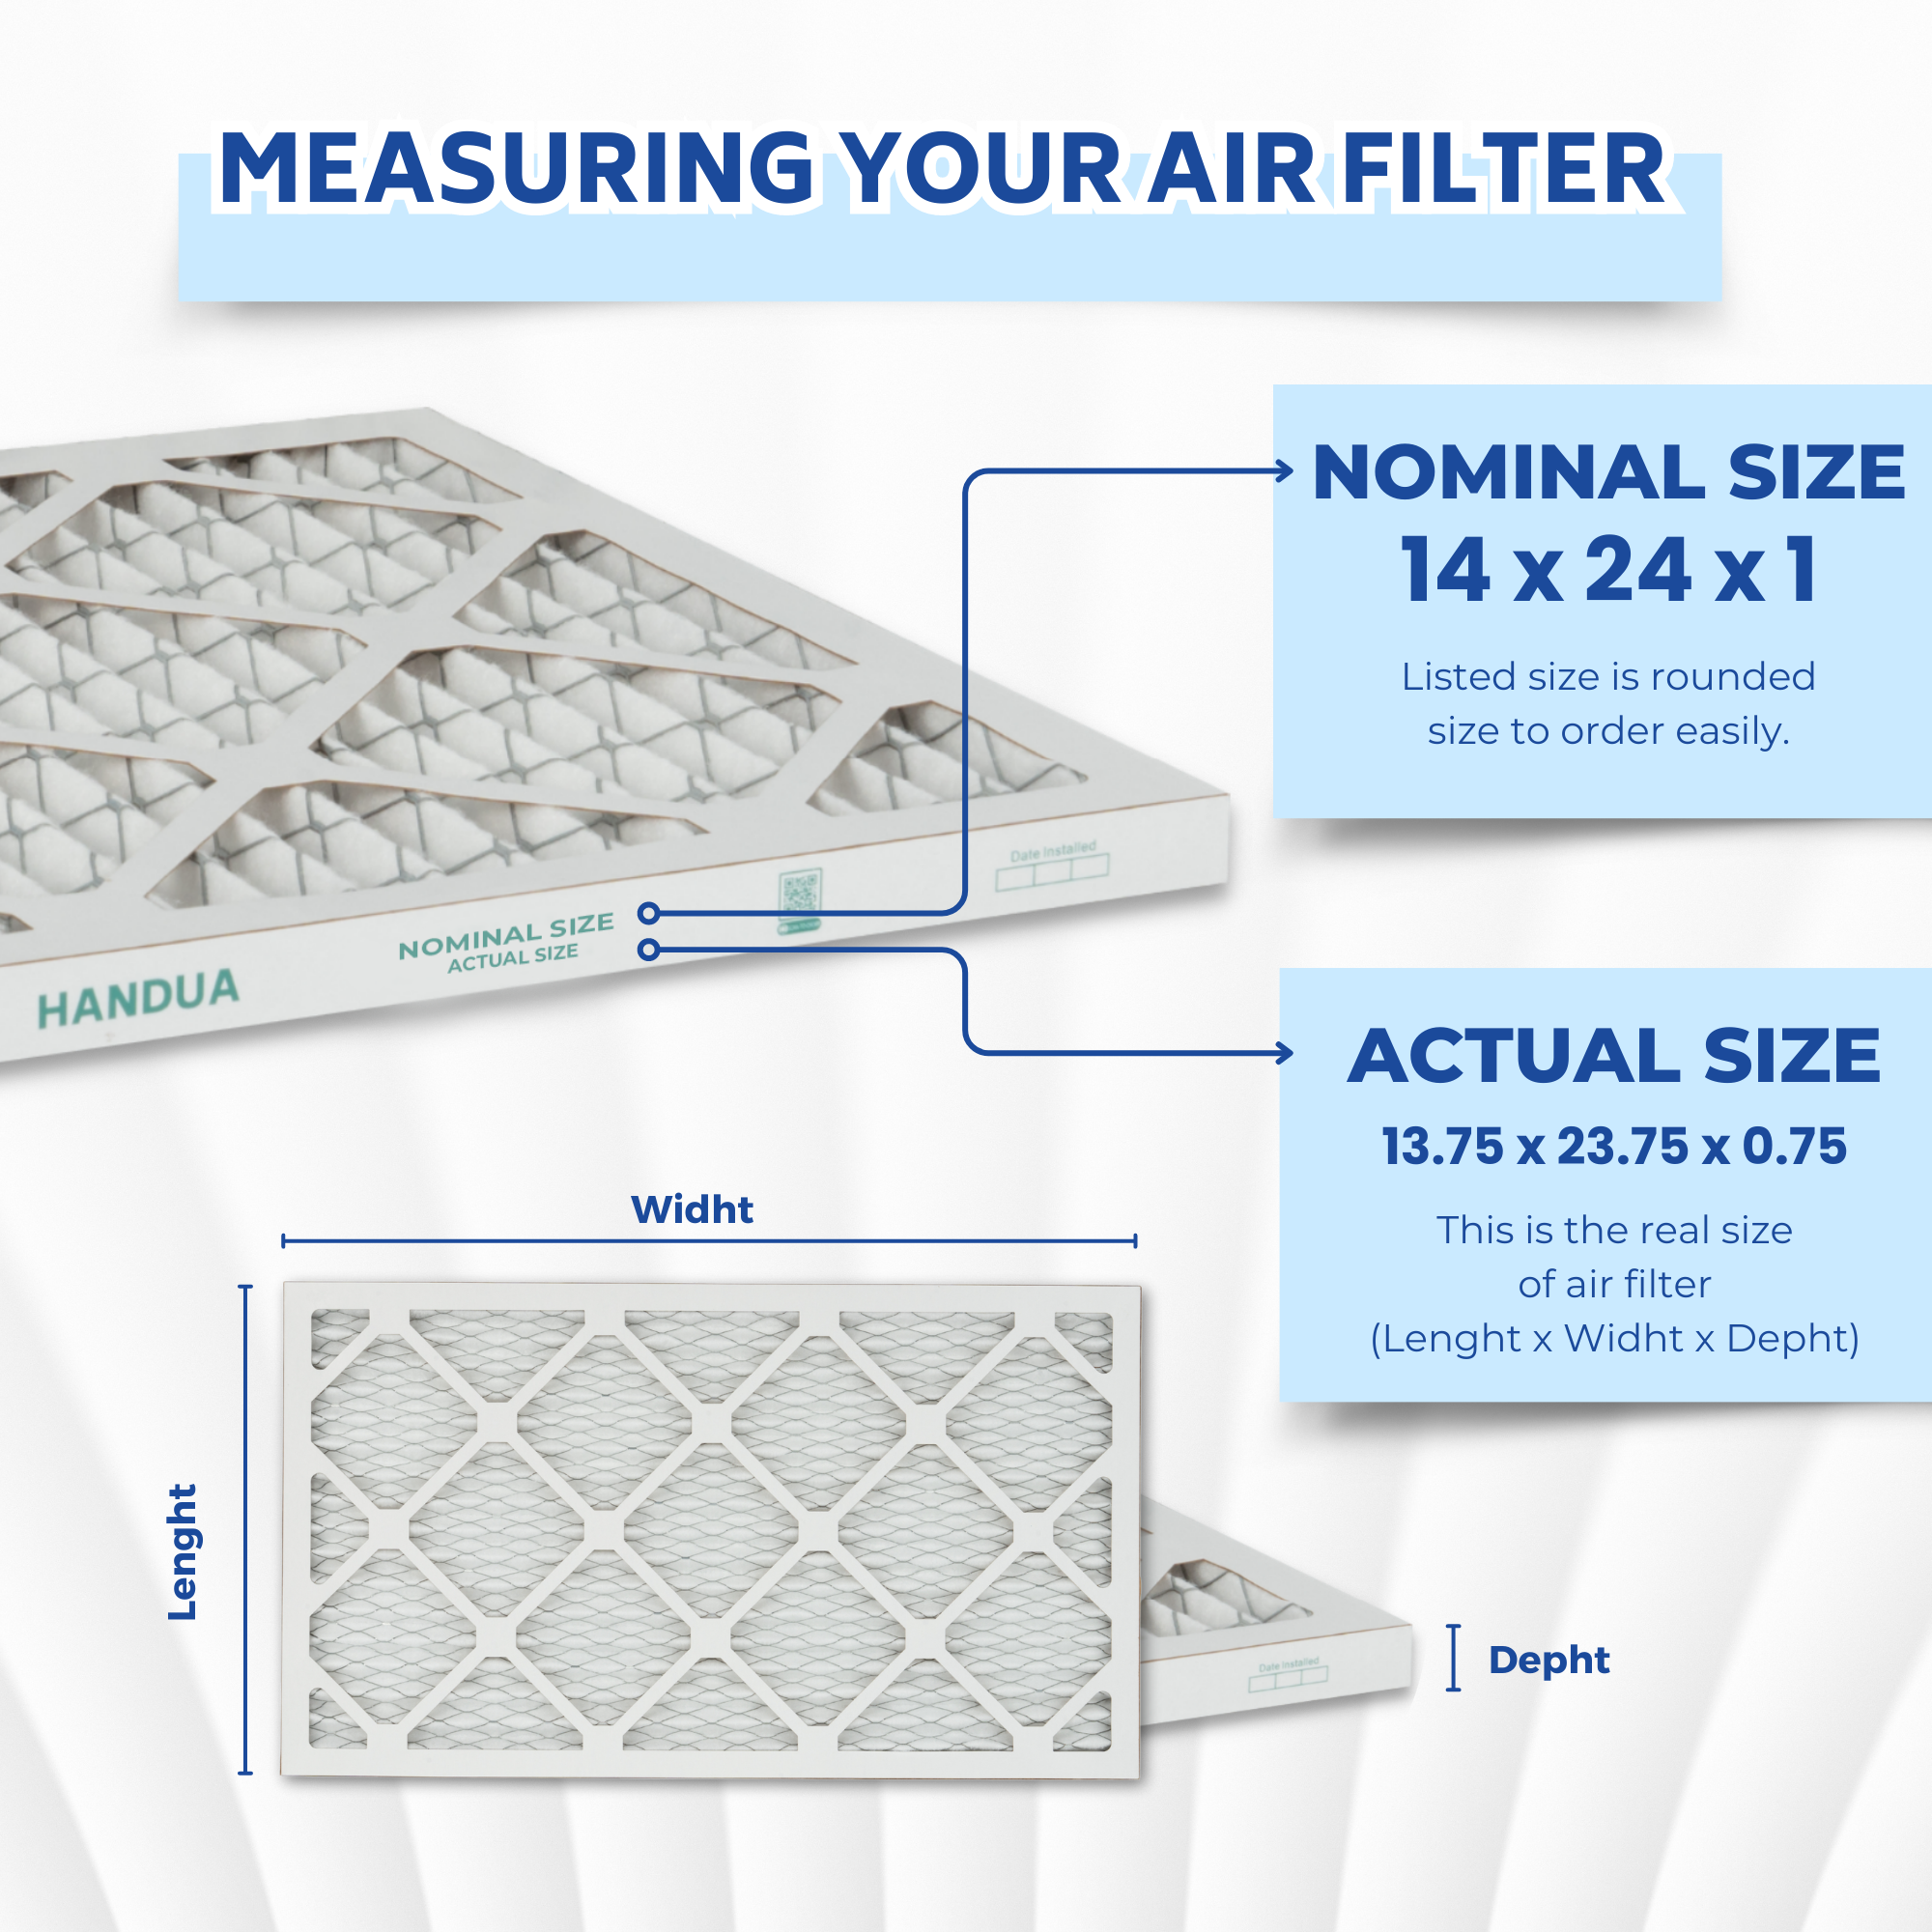 Handua 14x24x1 Air Filter MERV 13 Optimal Control, Plated Furnace AC Air Replacement Filter, 4 Pack (Actual Size: 13.75" x 23.75" x 0.75")